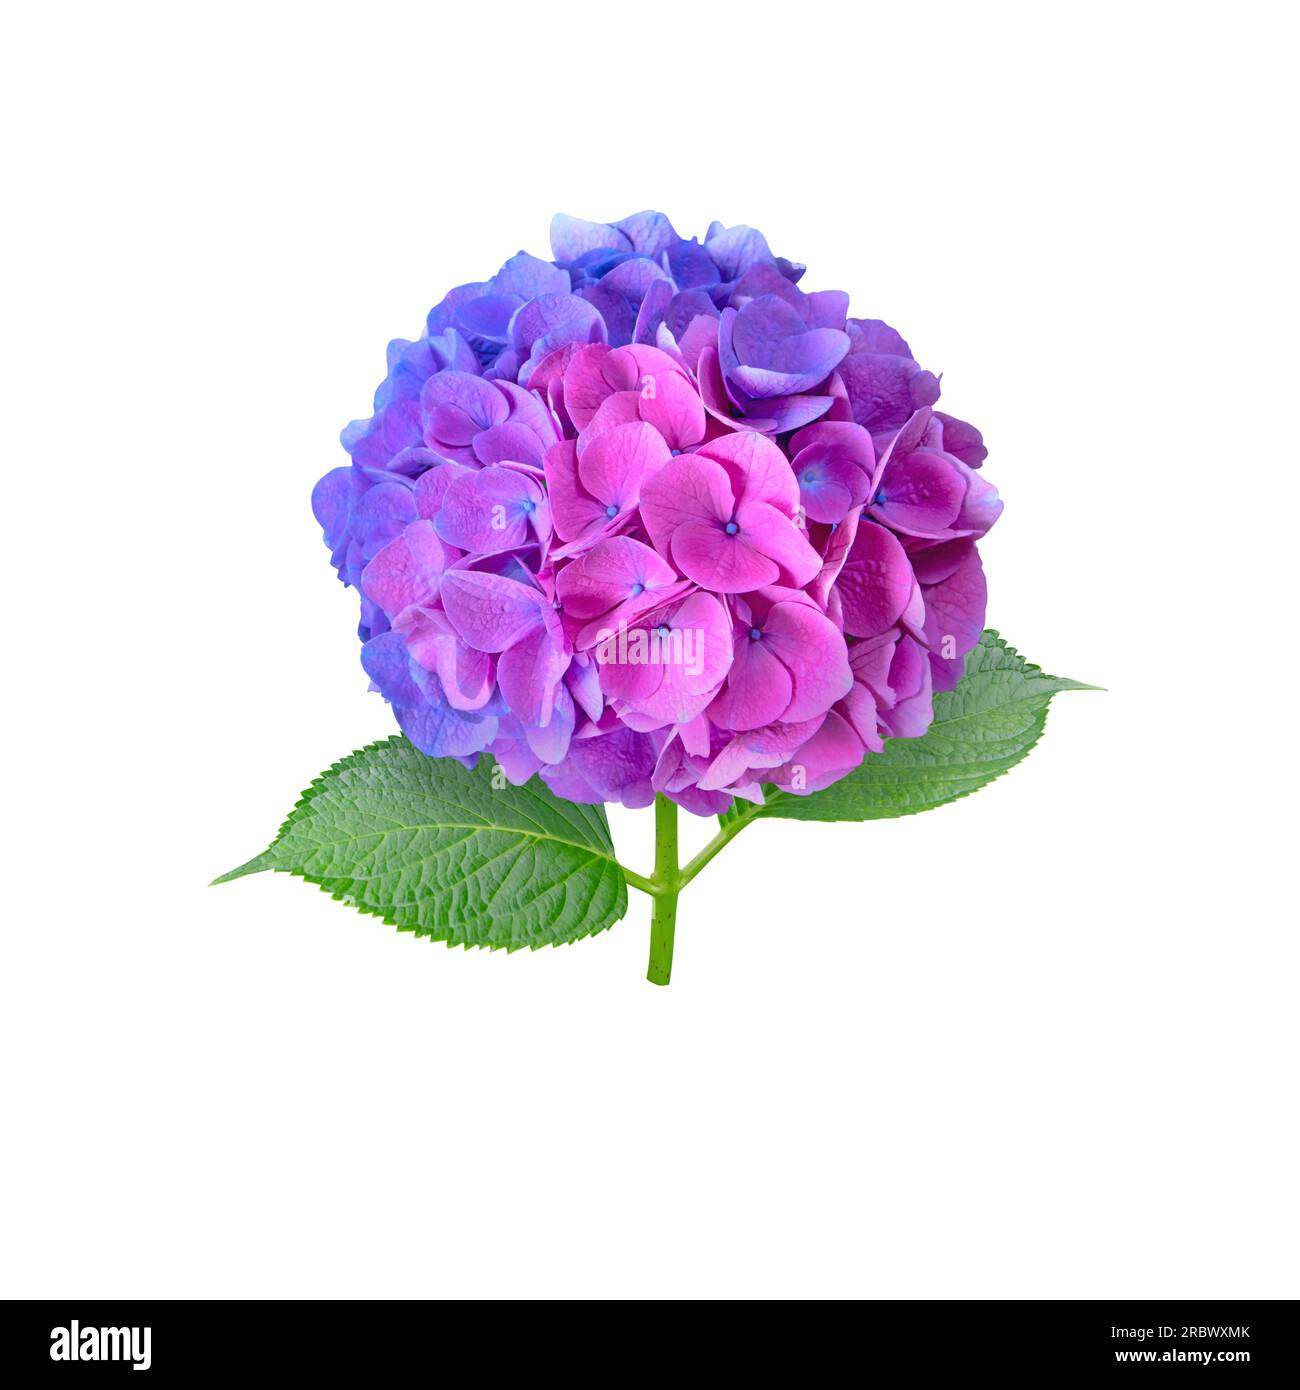 Hortensien-Blütenkopf in Farbe, isoliert auf Weiß. Halb blau und halb rosa. Bicolor-Hortensien-Blütenpflanze. Stockfoto